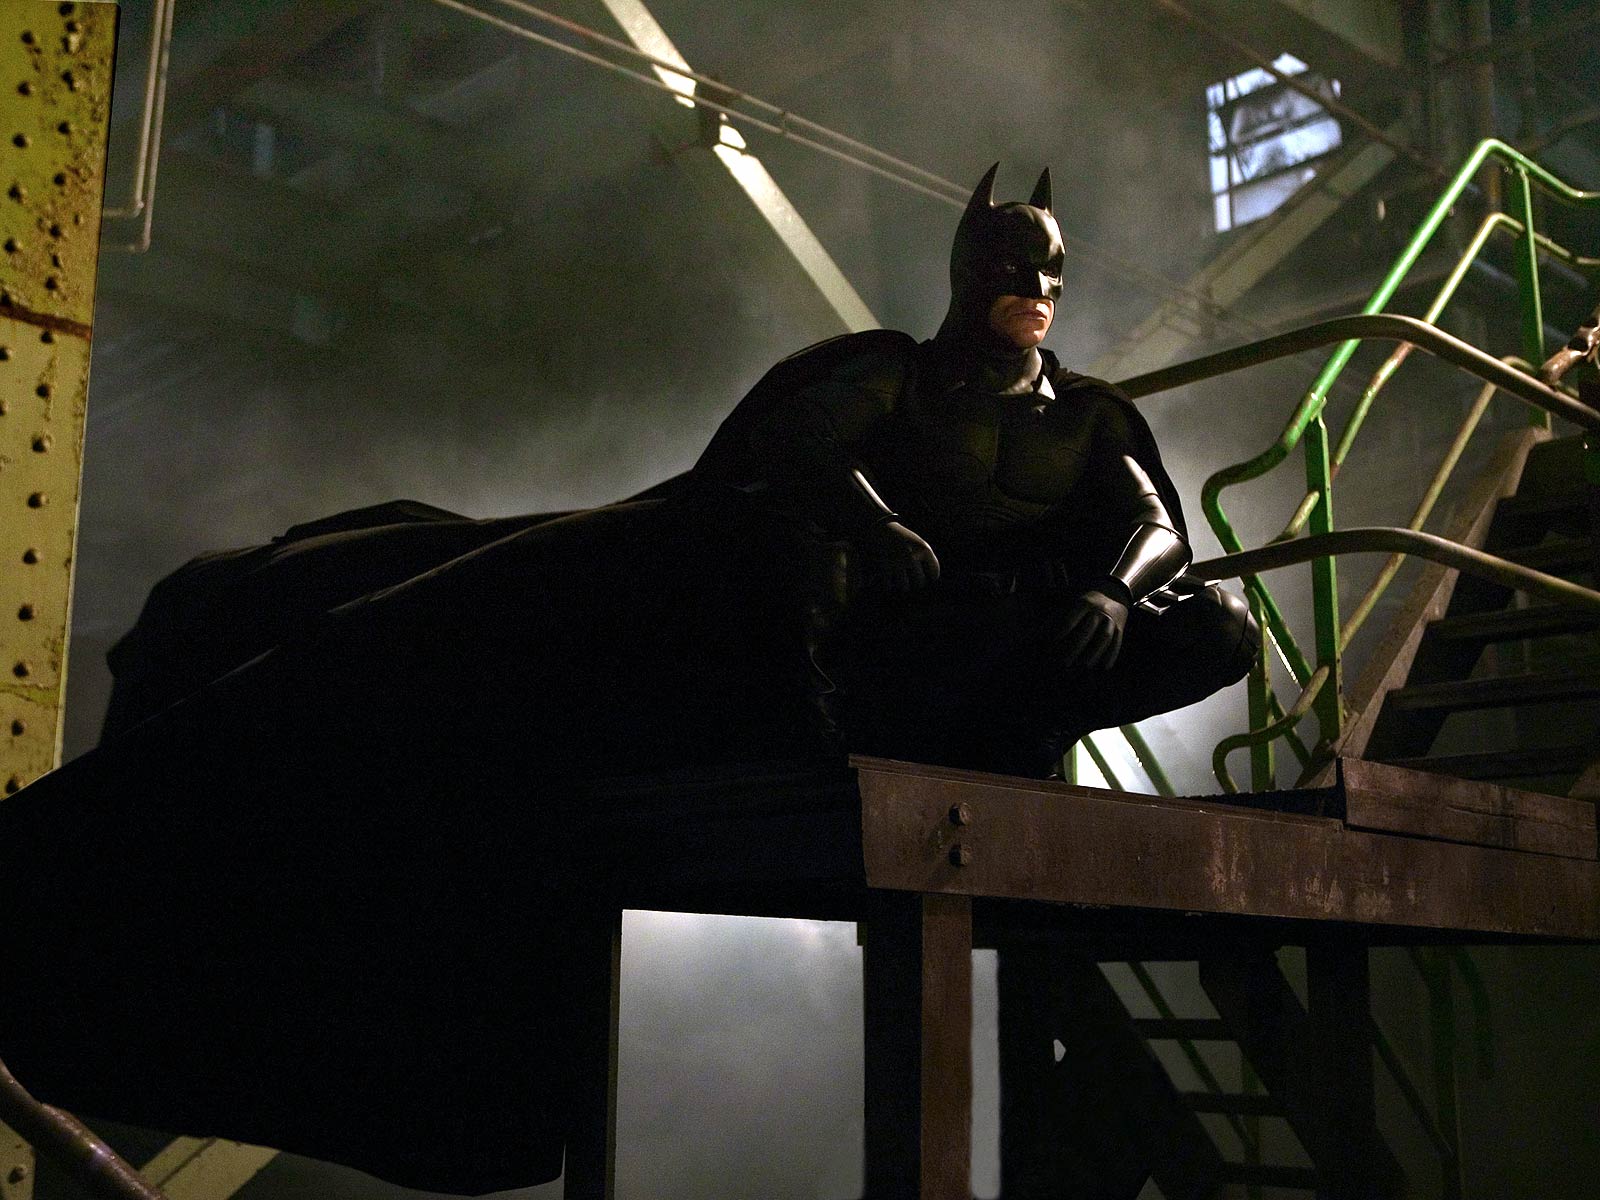 Christian-Bale-in-Batman-Begins-2005.jpg